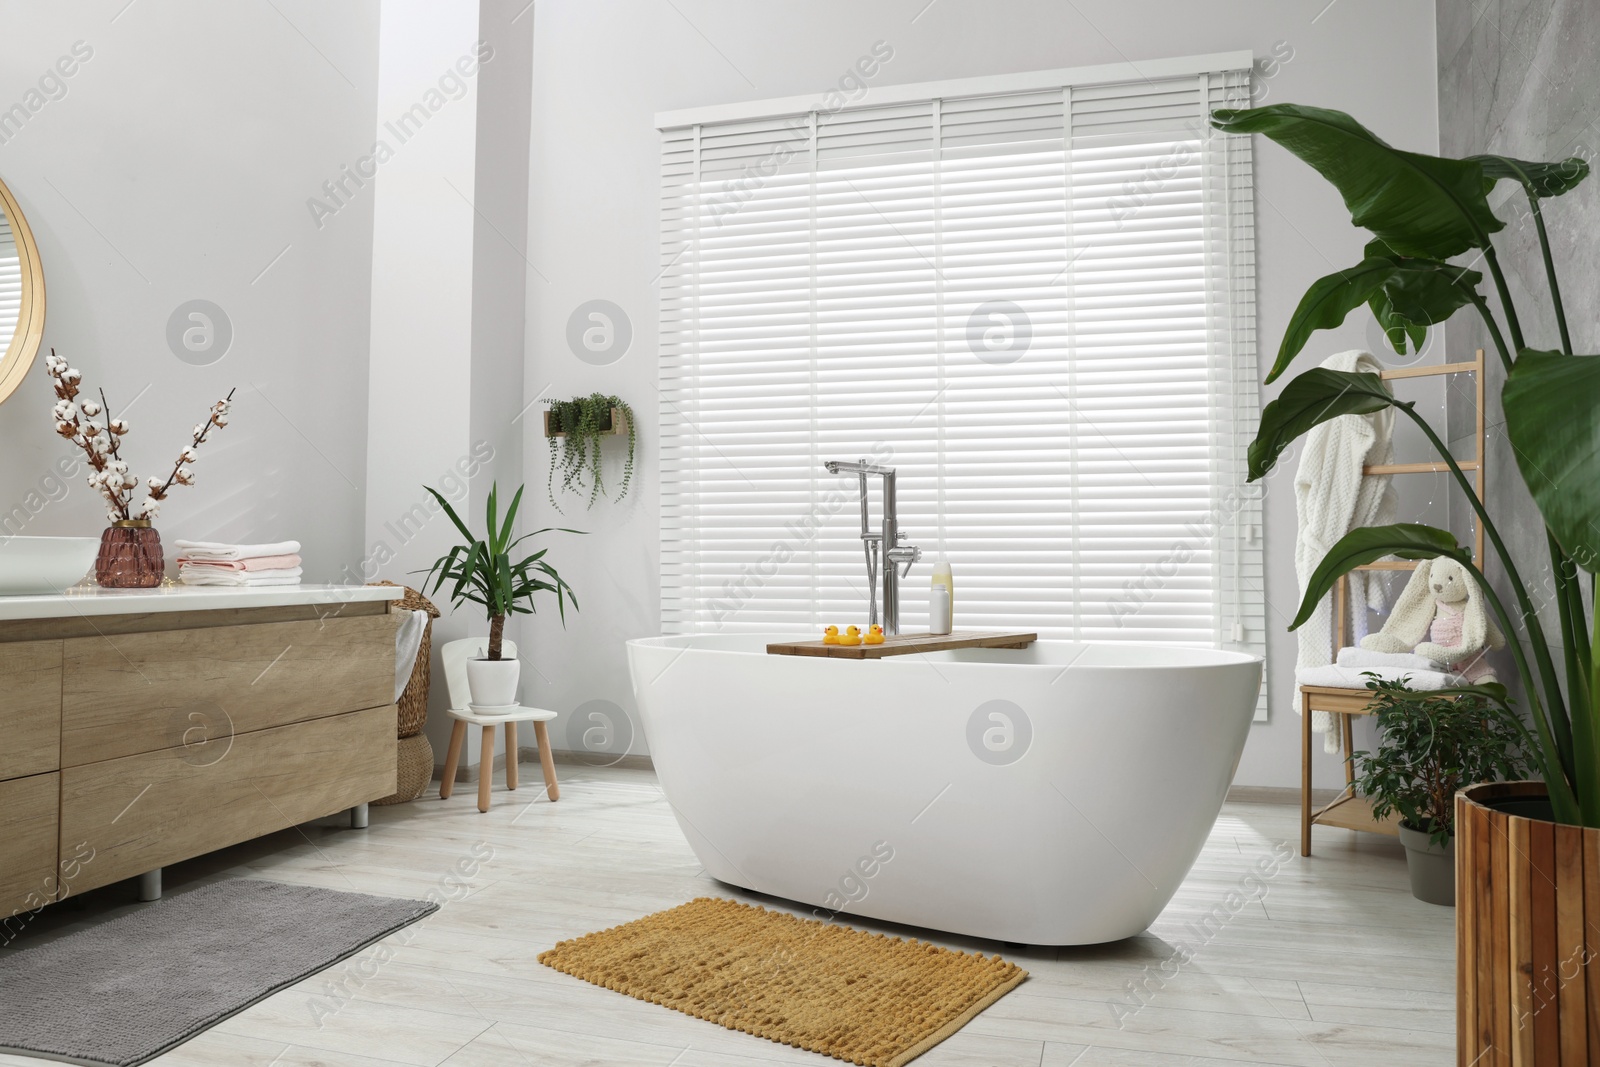 Photo of Stylish bathroom interior with beautiful tub and decor elements